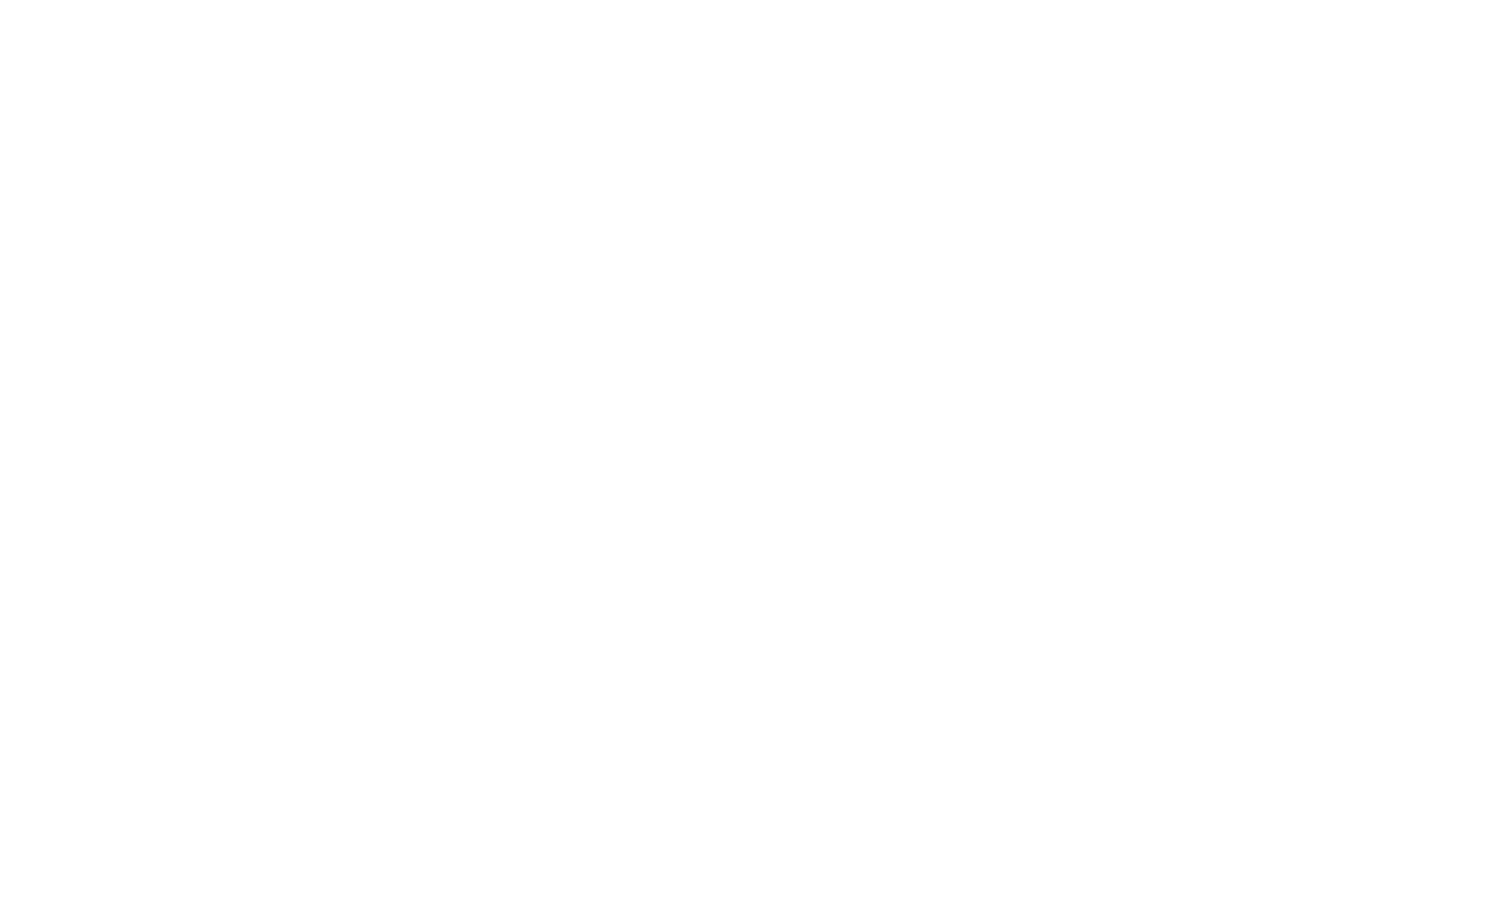 Villabon Entertainment